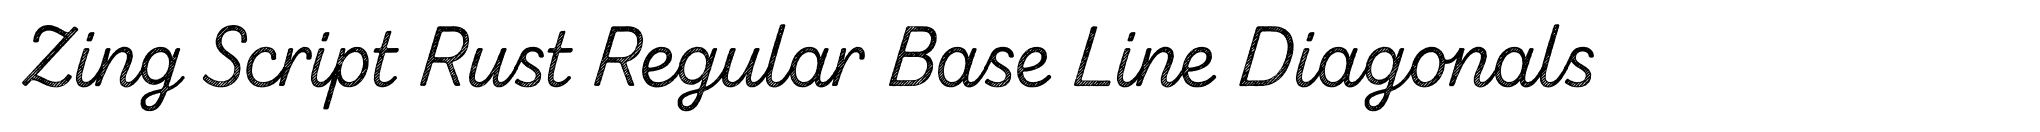 Zing Script Rust Regular Base Line Diagonals image